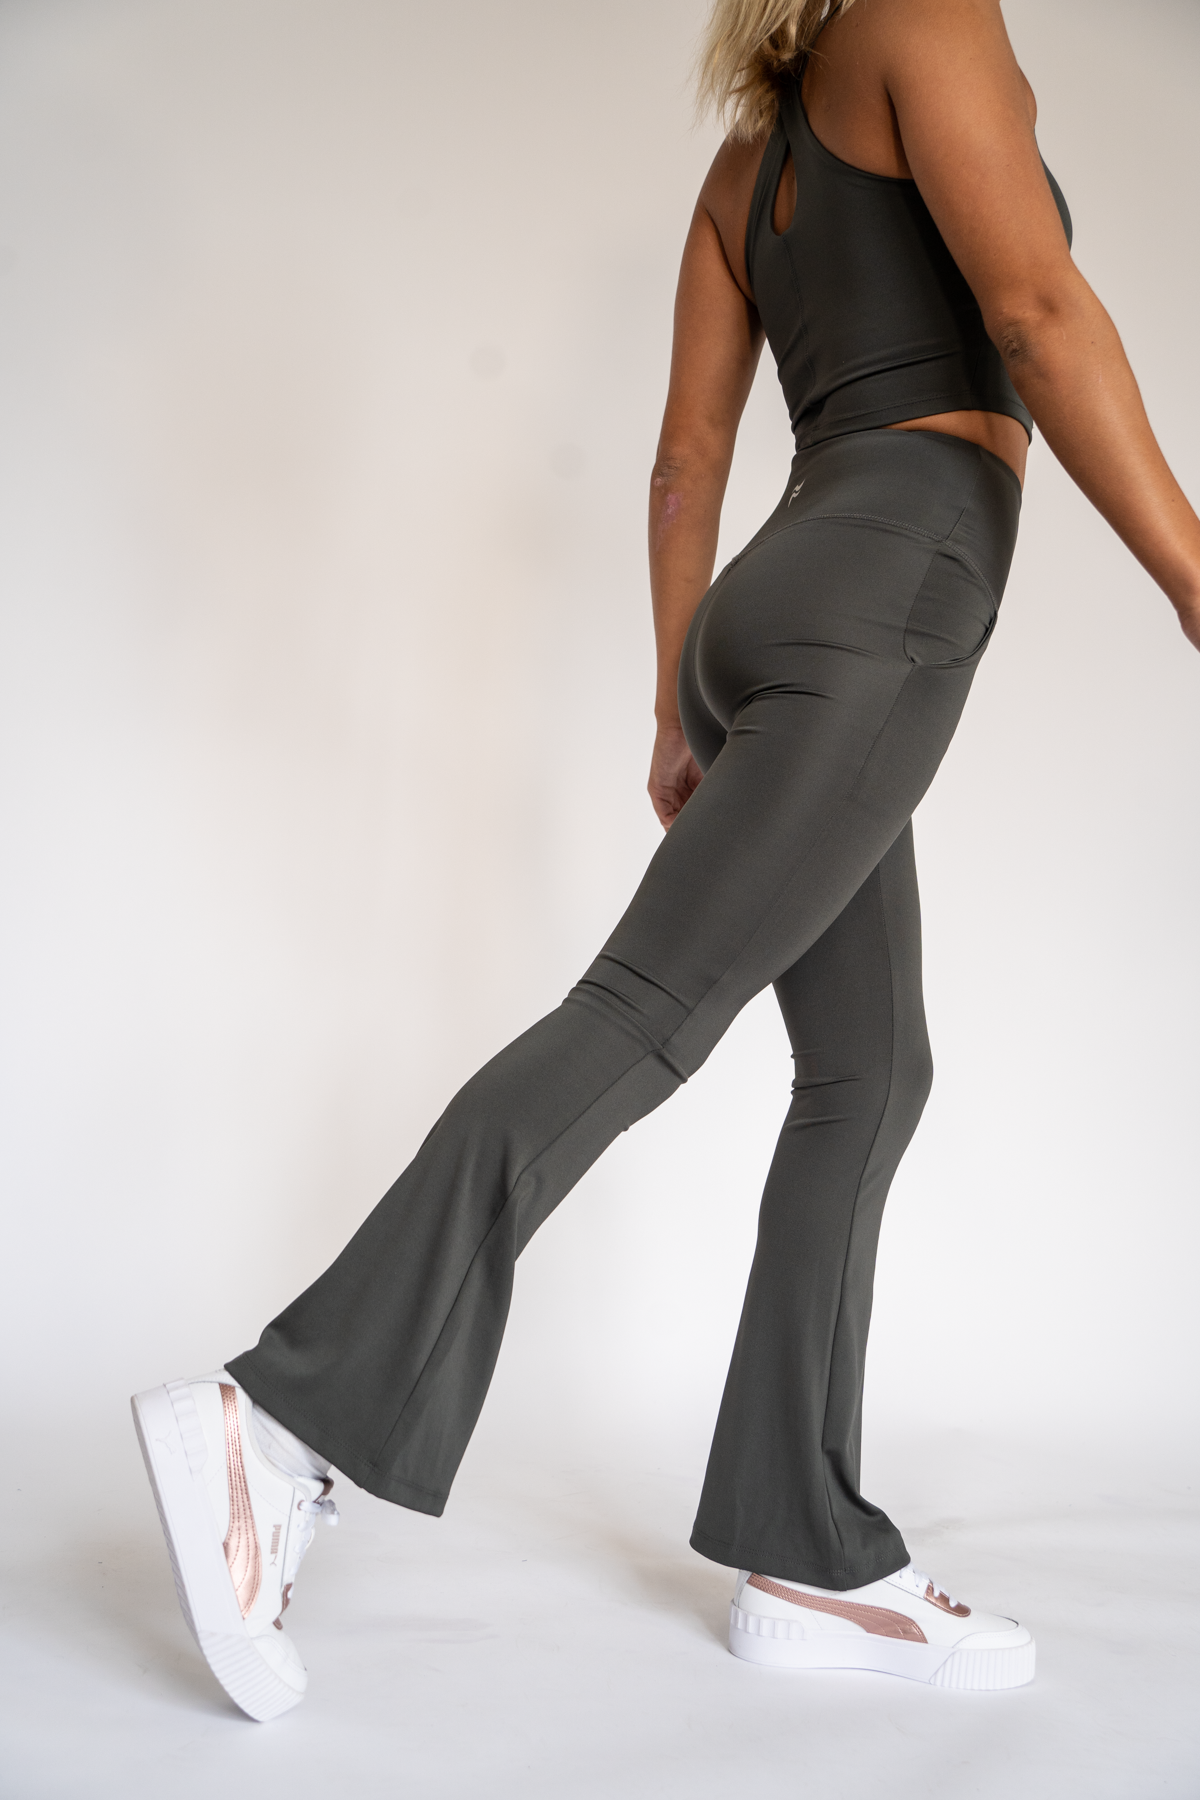 Mia Flare Leggings Charcoal Grey XS S M L XL